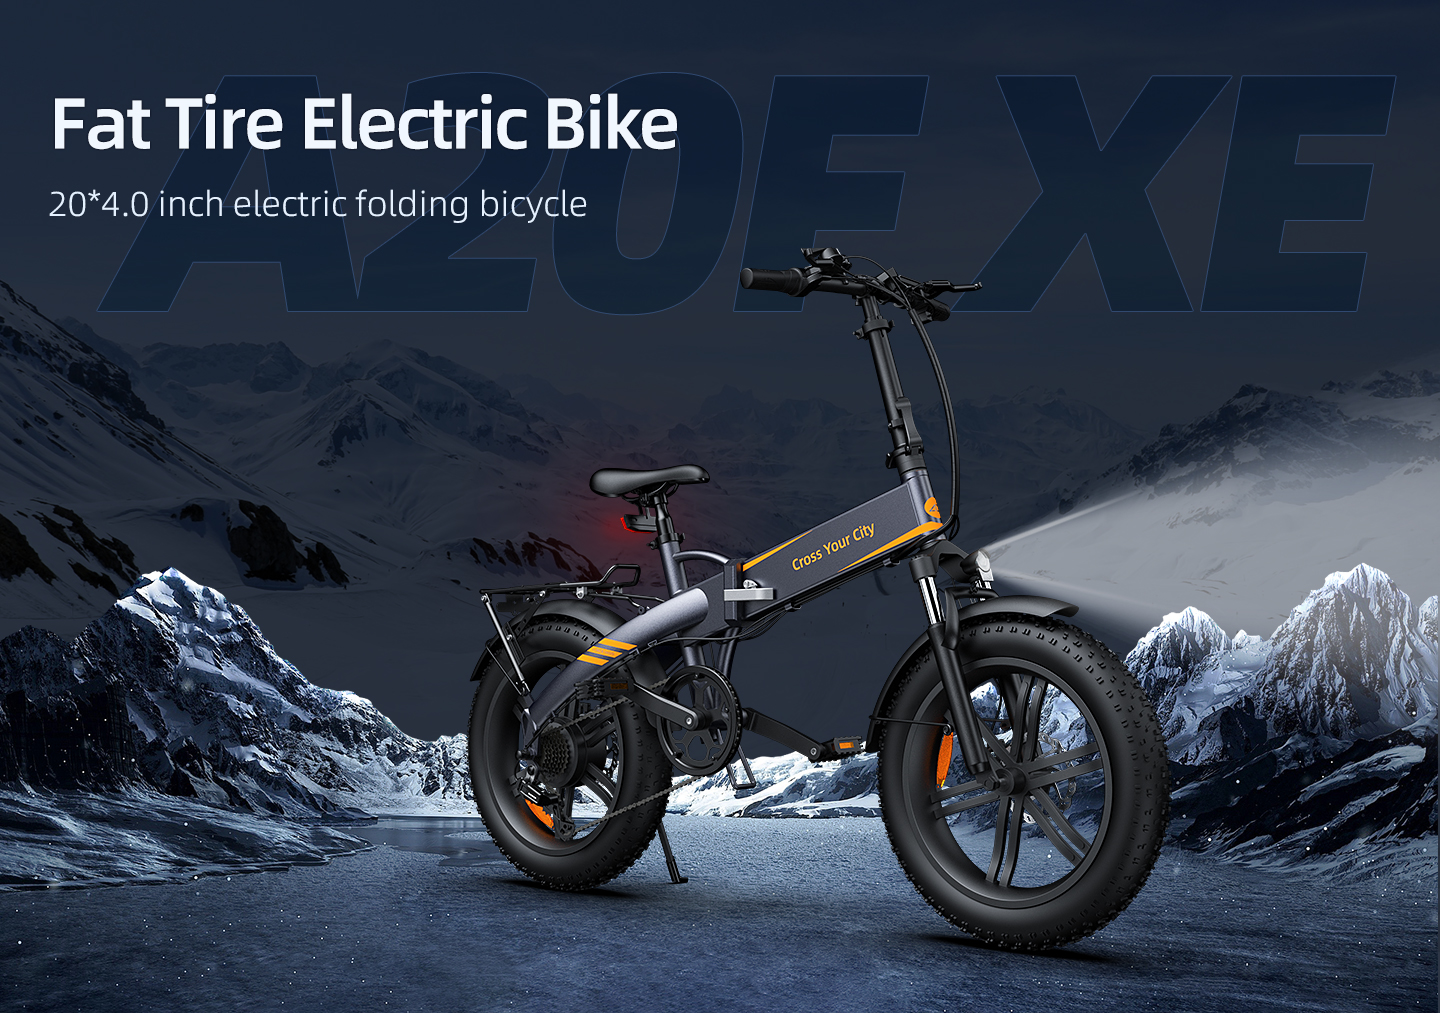 Bicicleta Electrica ADO A20F XE